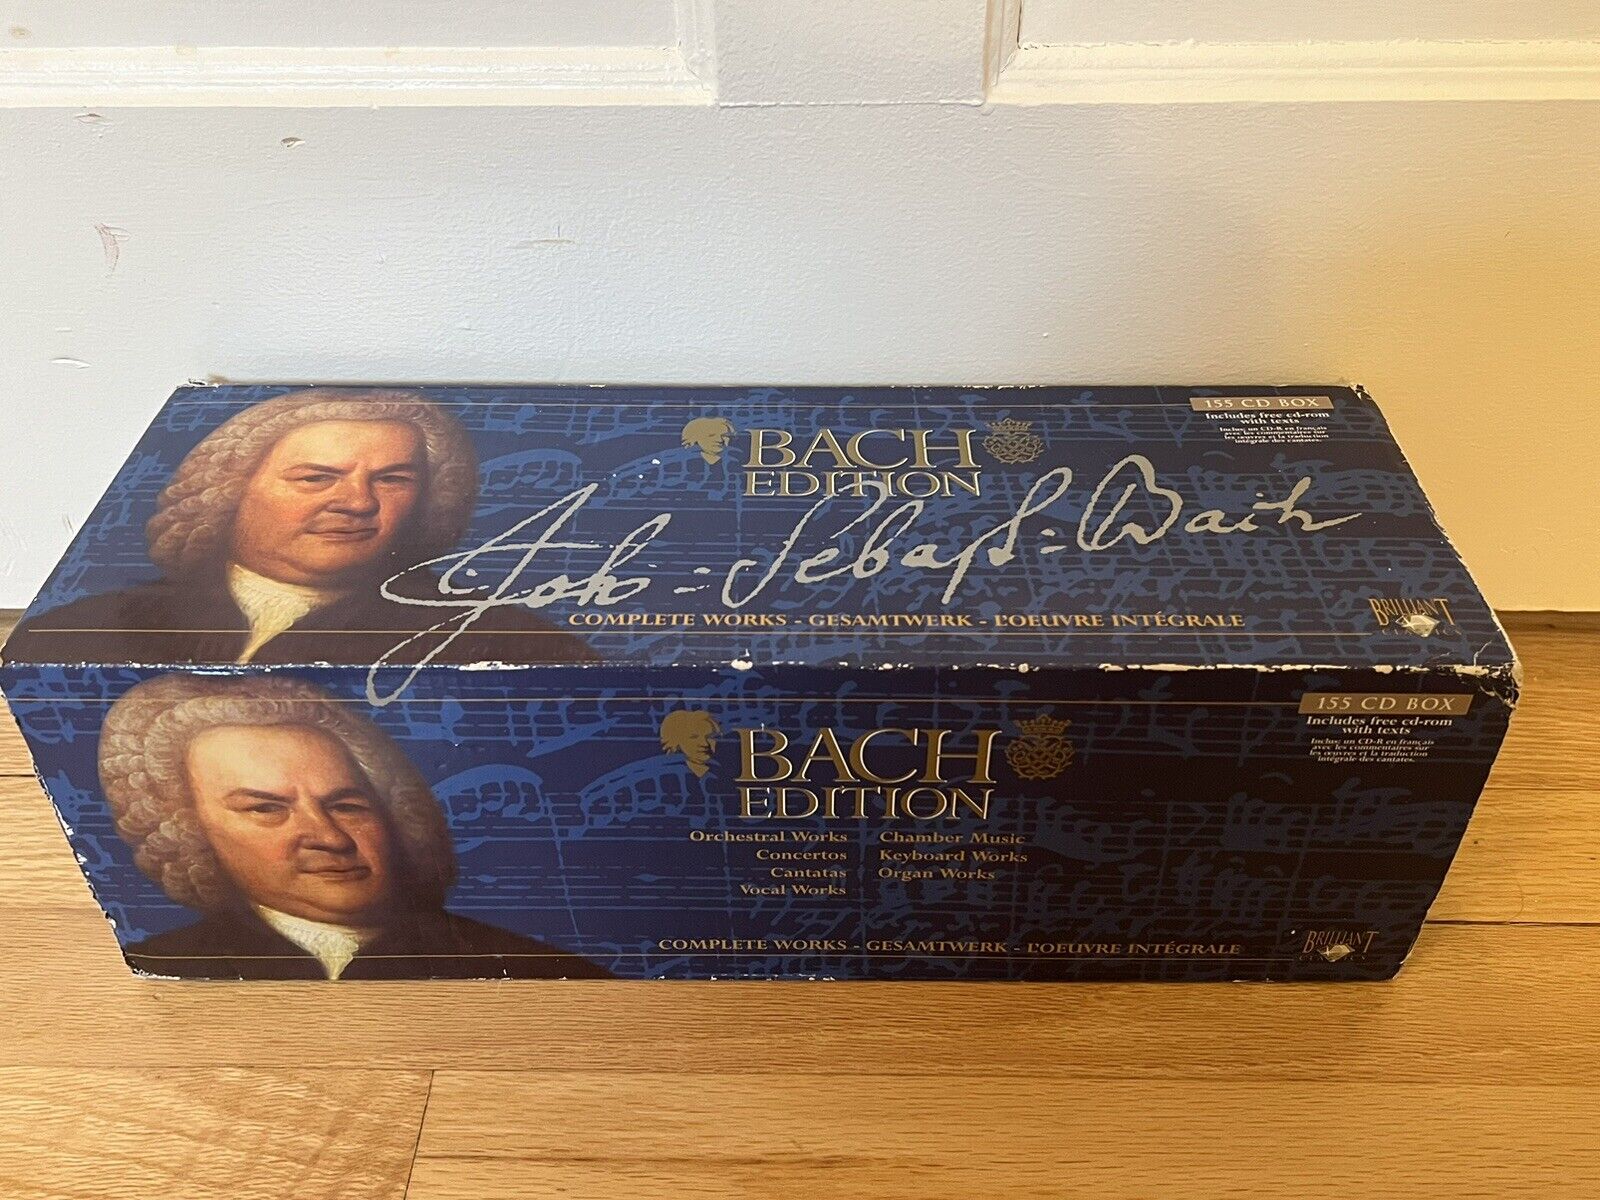 Brilliant Classics Bach Edition: Complete Works [Box Set] 155 CDs 100% Complete